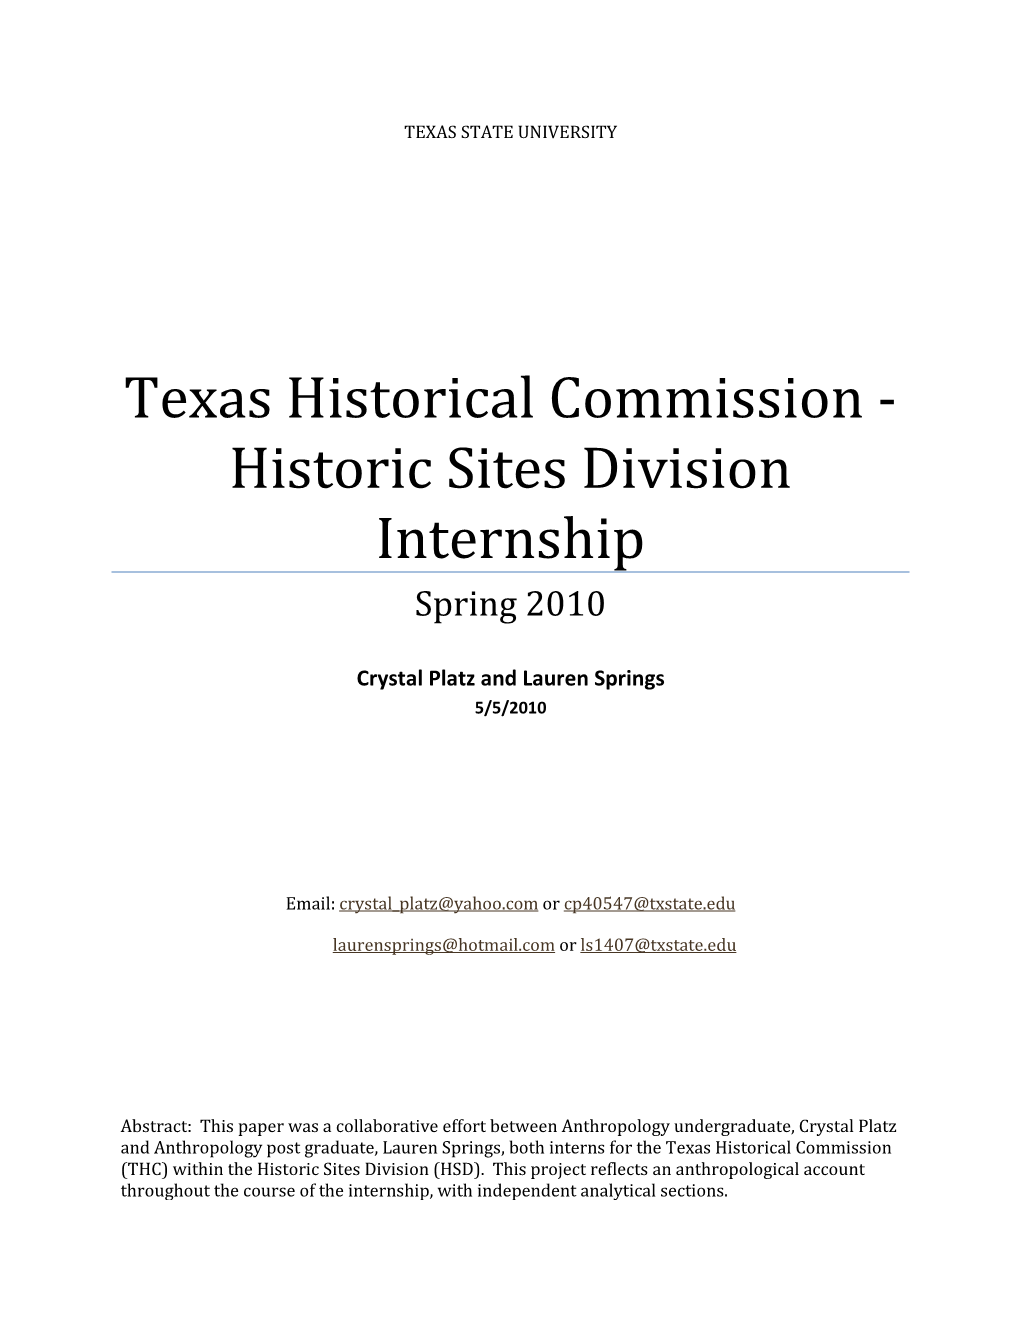 Texas Historical Commission - Historic Sites Division Internship Spring 2010